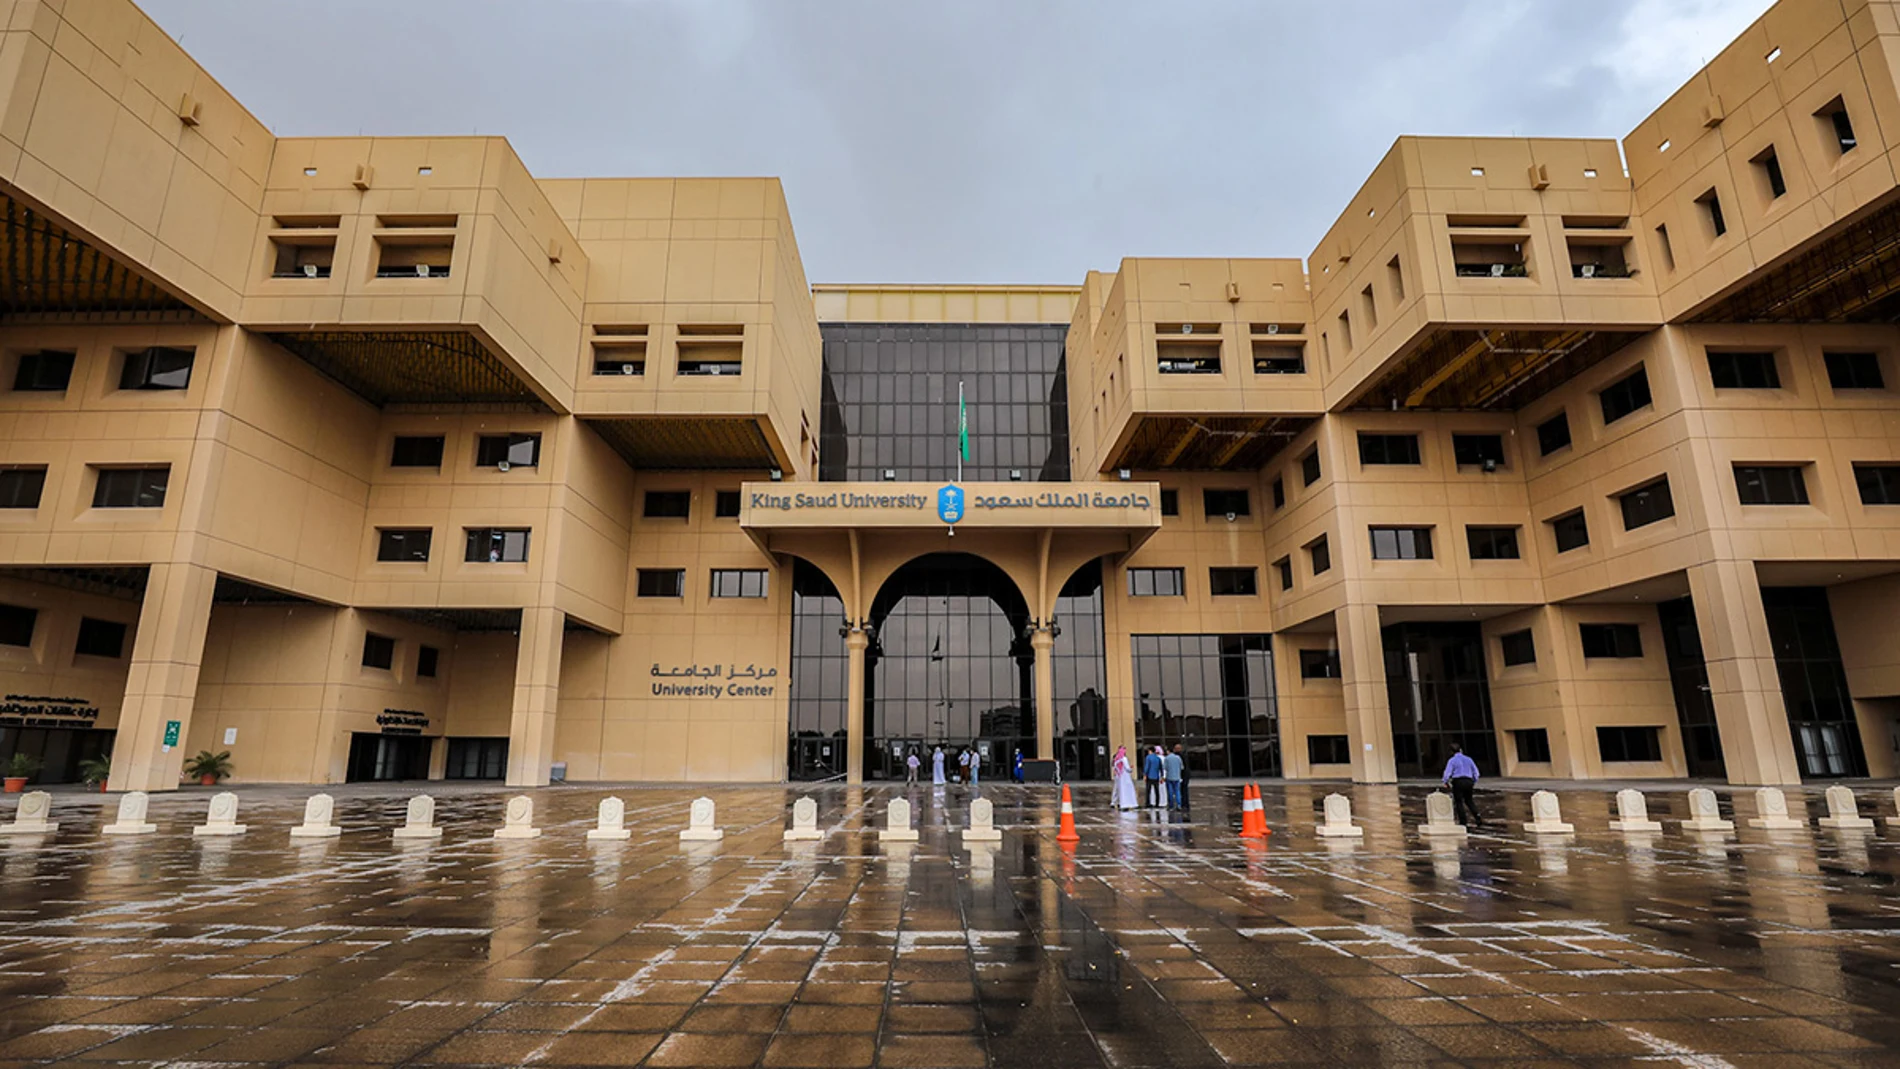 Universidad King Saud en Riyadh, Arabia Saudita.